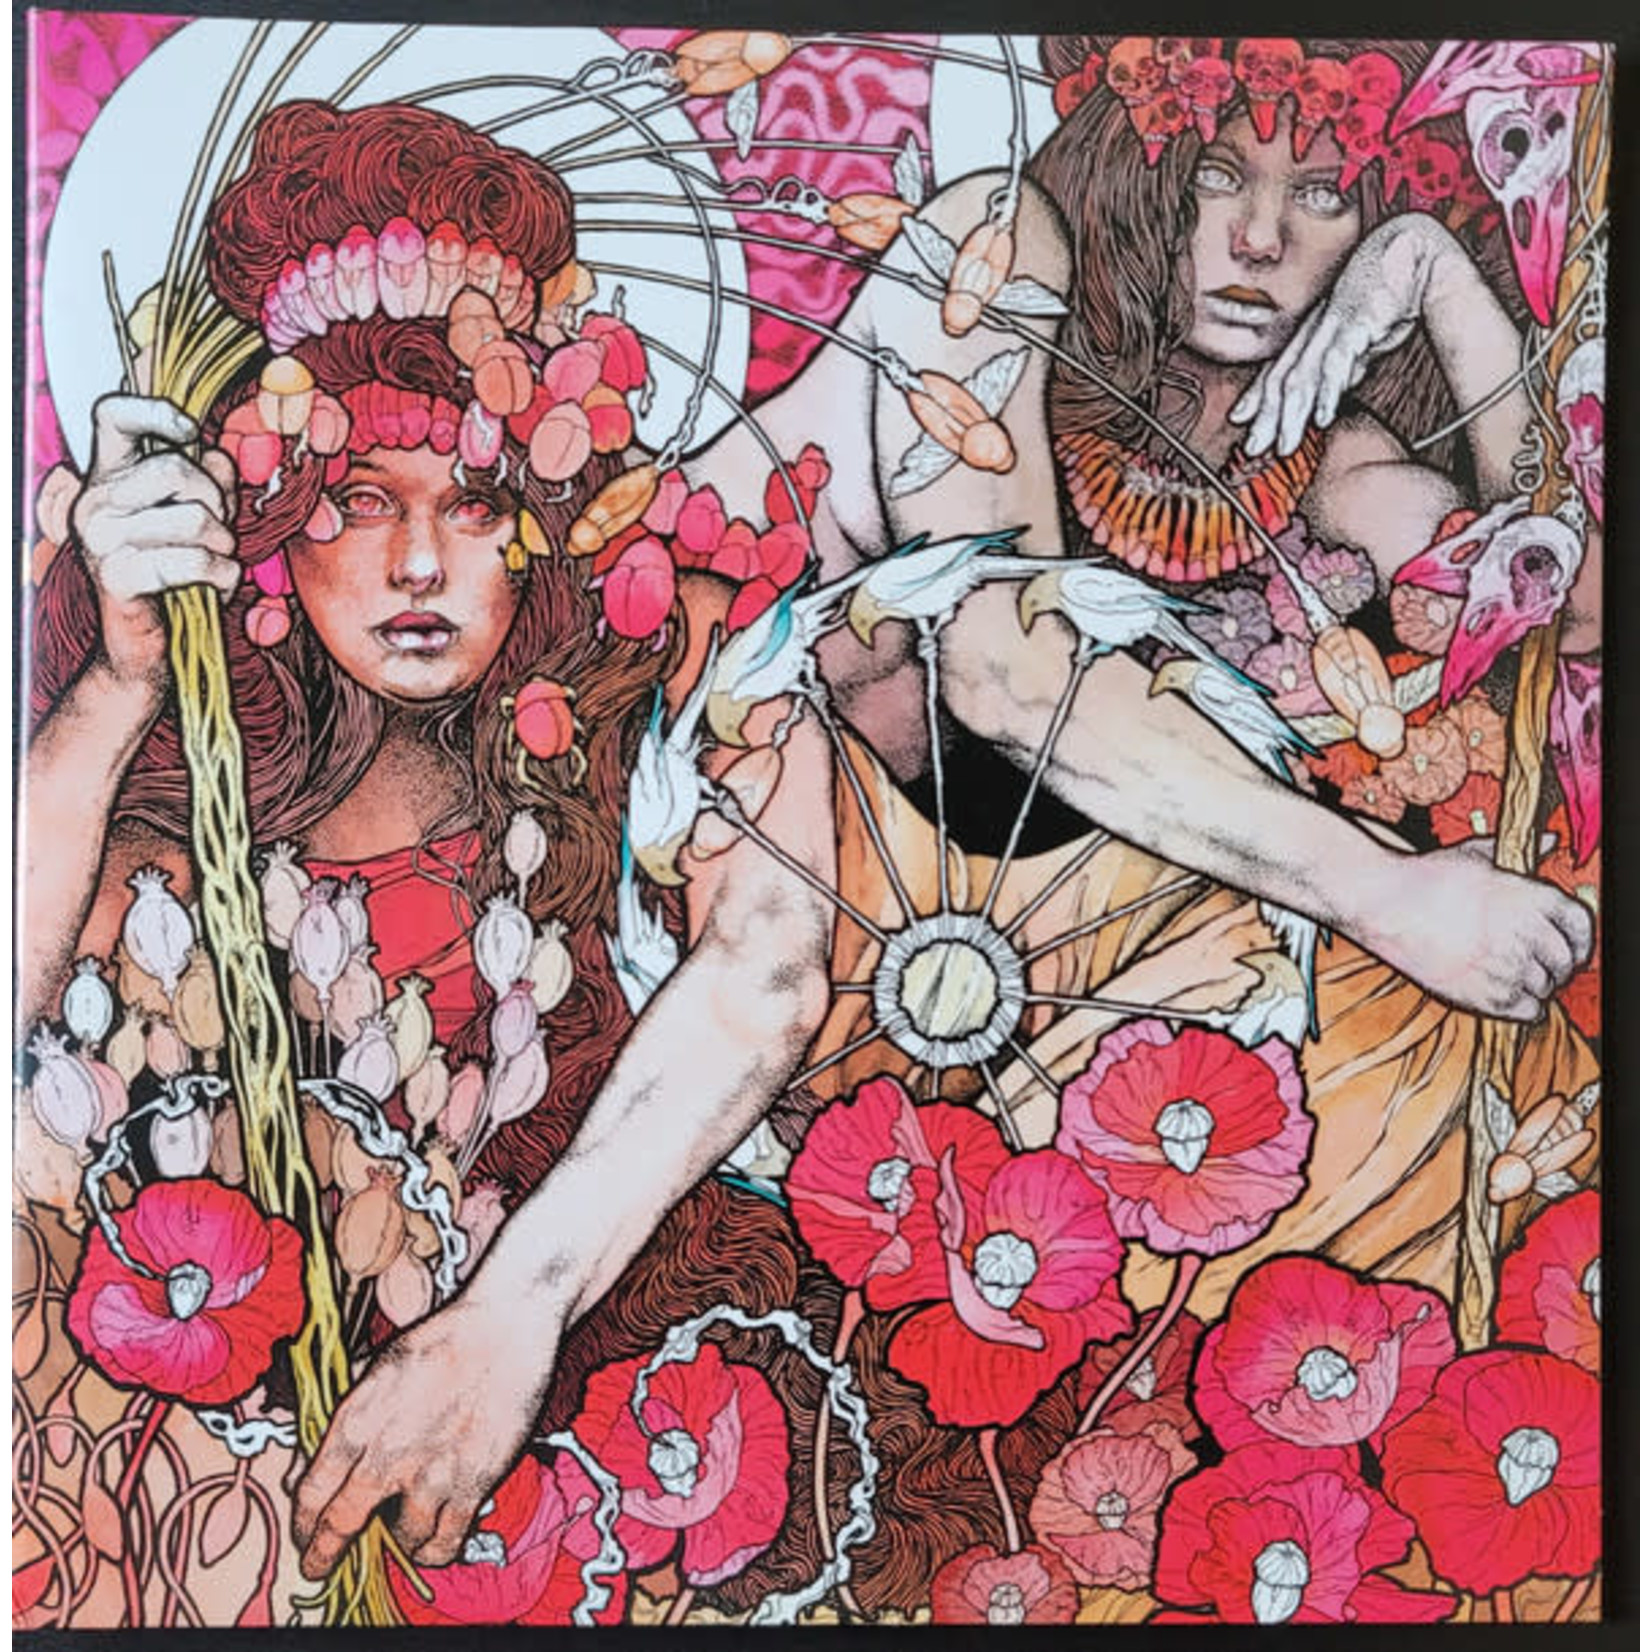 Splendor Fantastisk Slime Relapse Baroness - Red Album (2LP) [Red/Black Galaxy] - Culture Clash